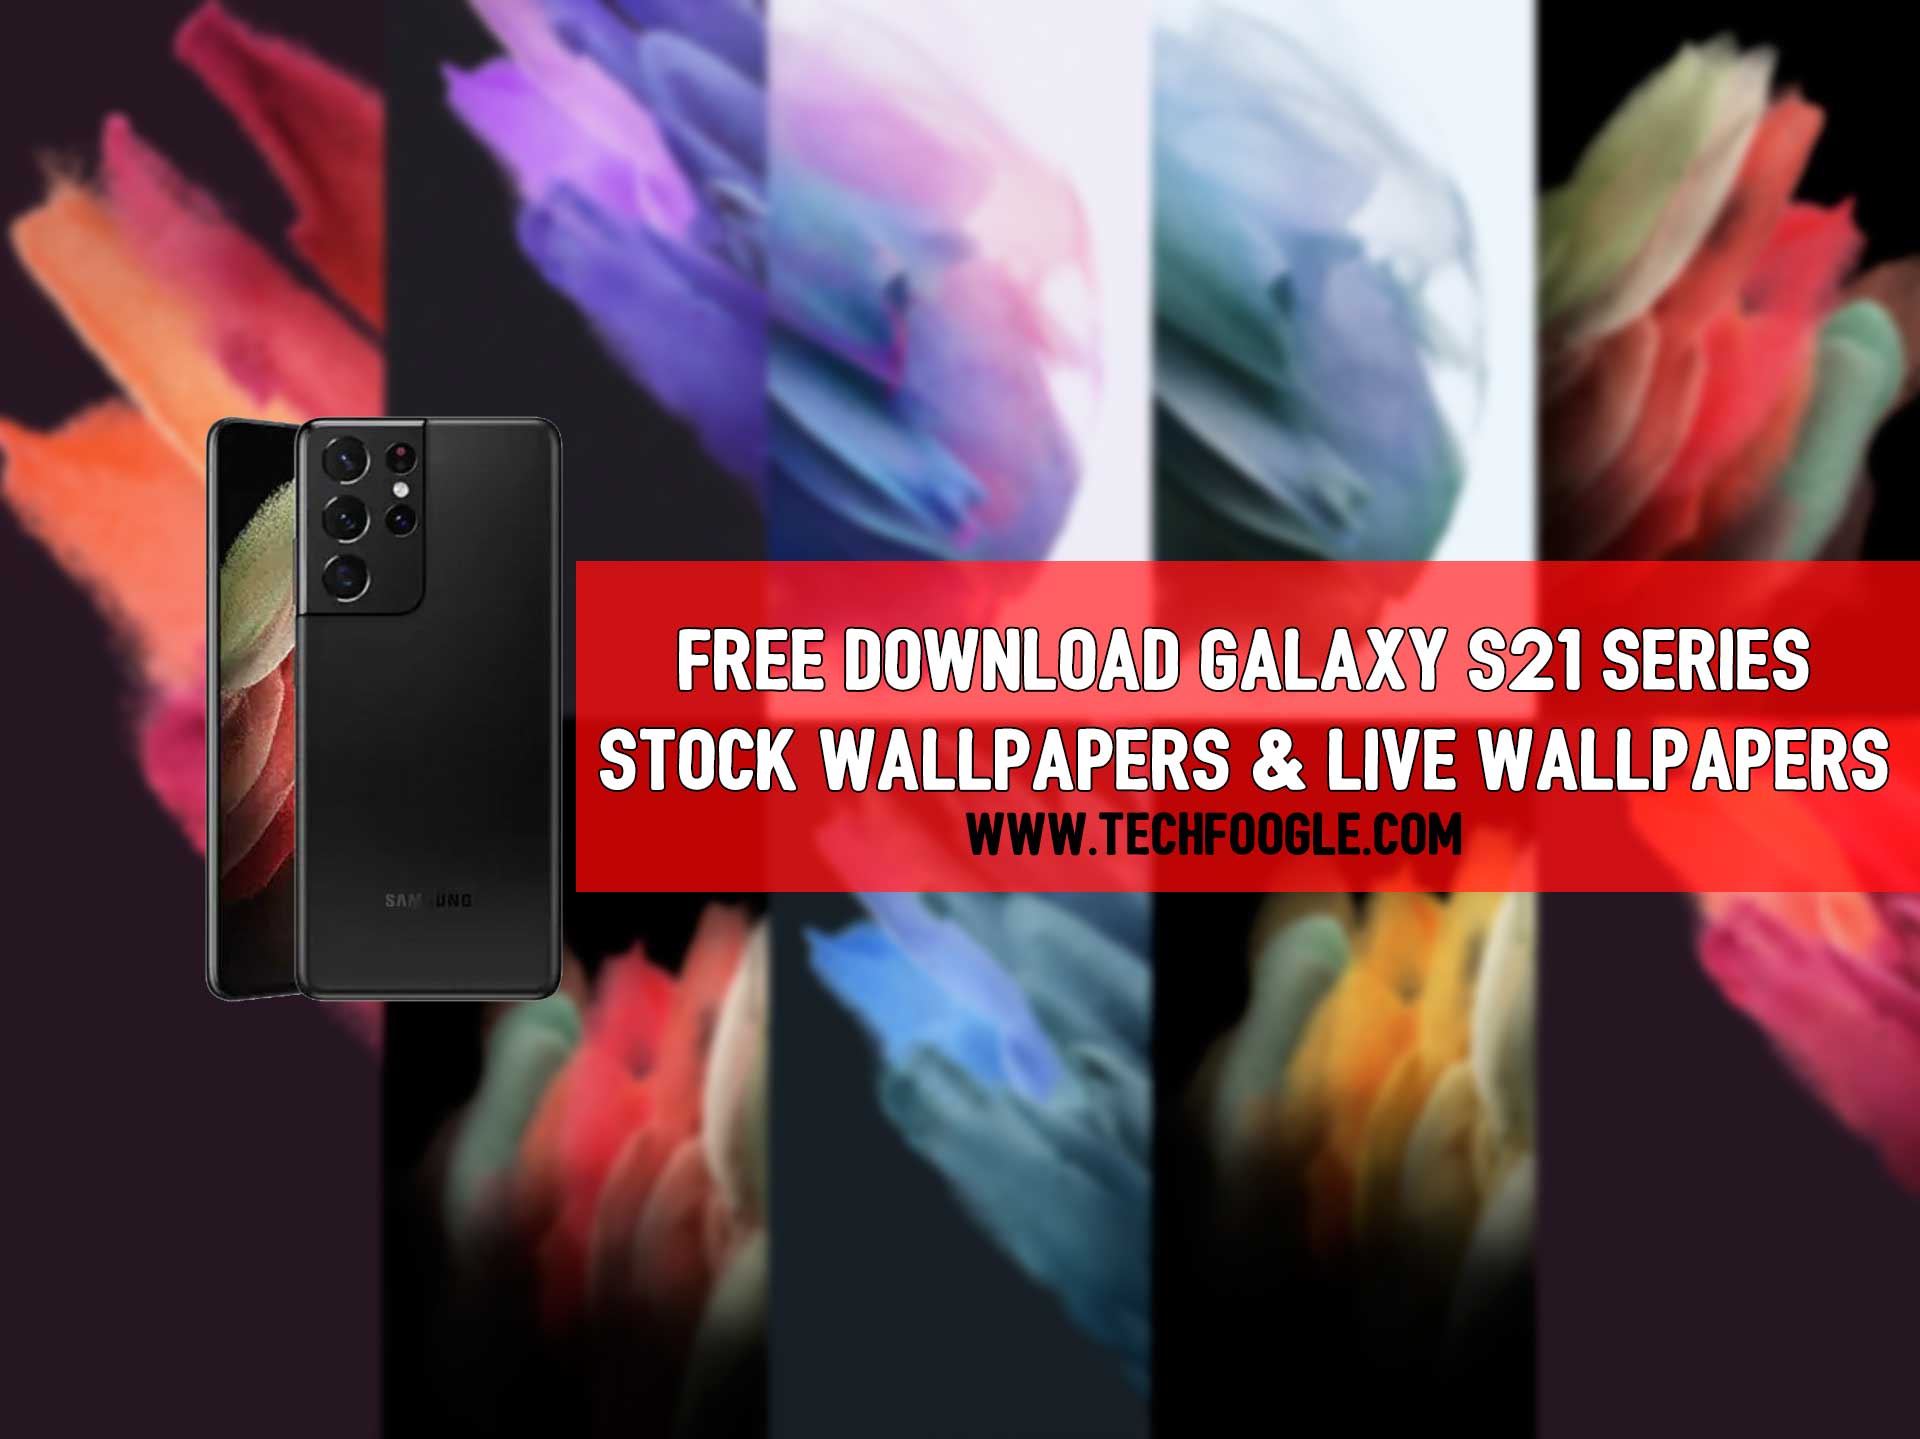 Free Download Samsung Galaxy S21 Ultra Stock Wallpapers 4k Tech Foogle